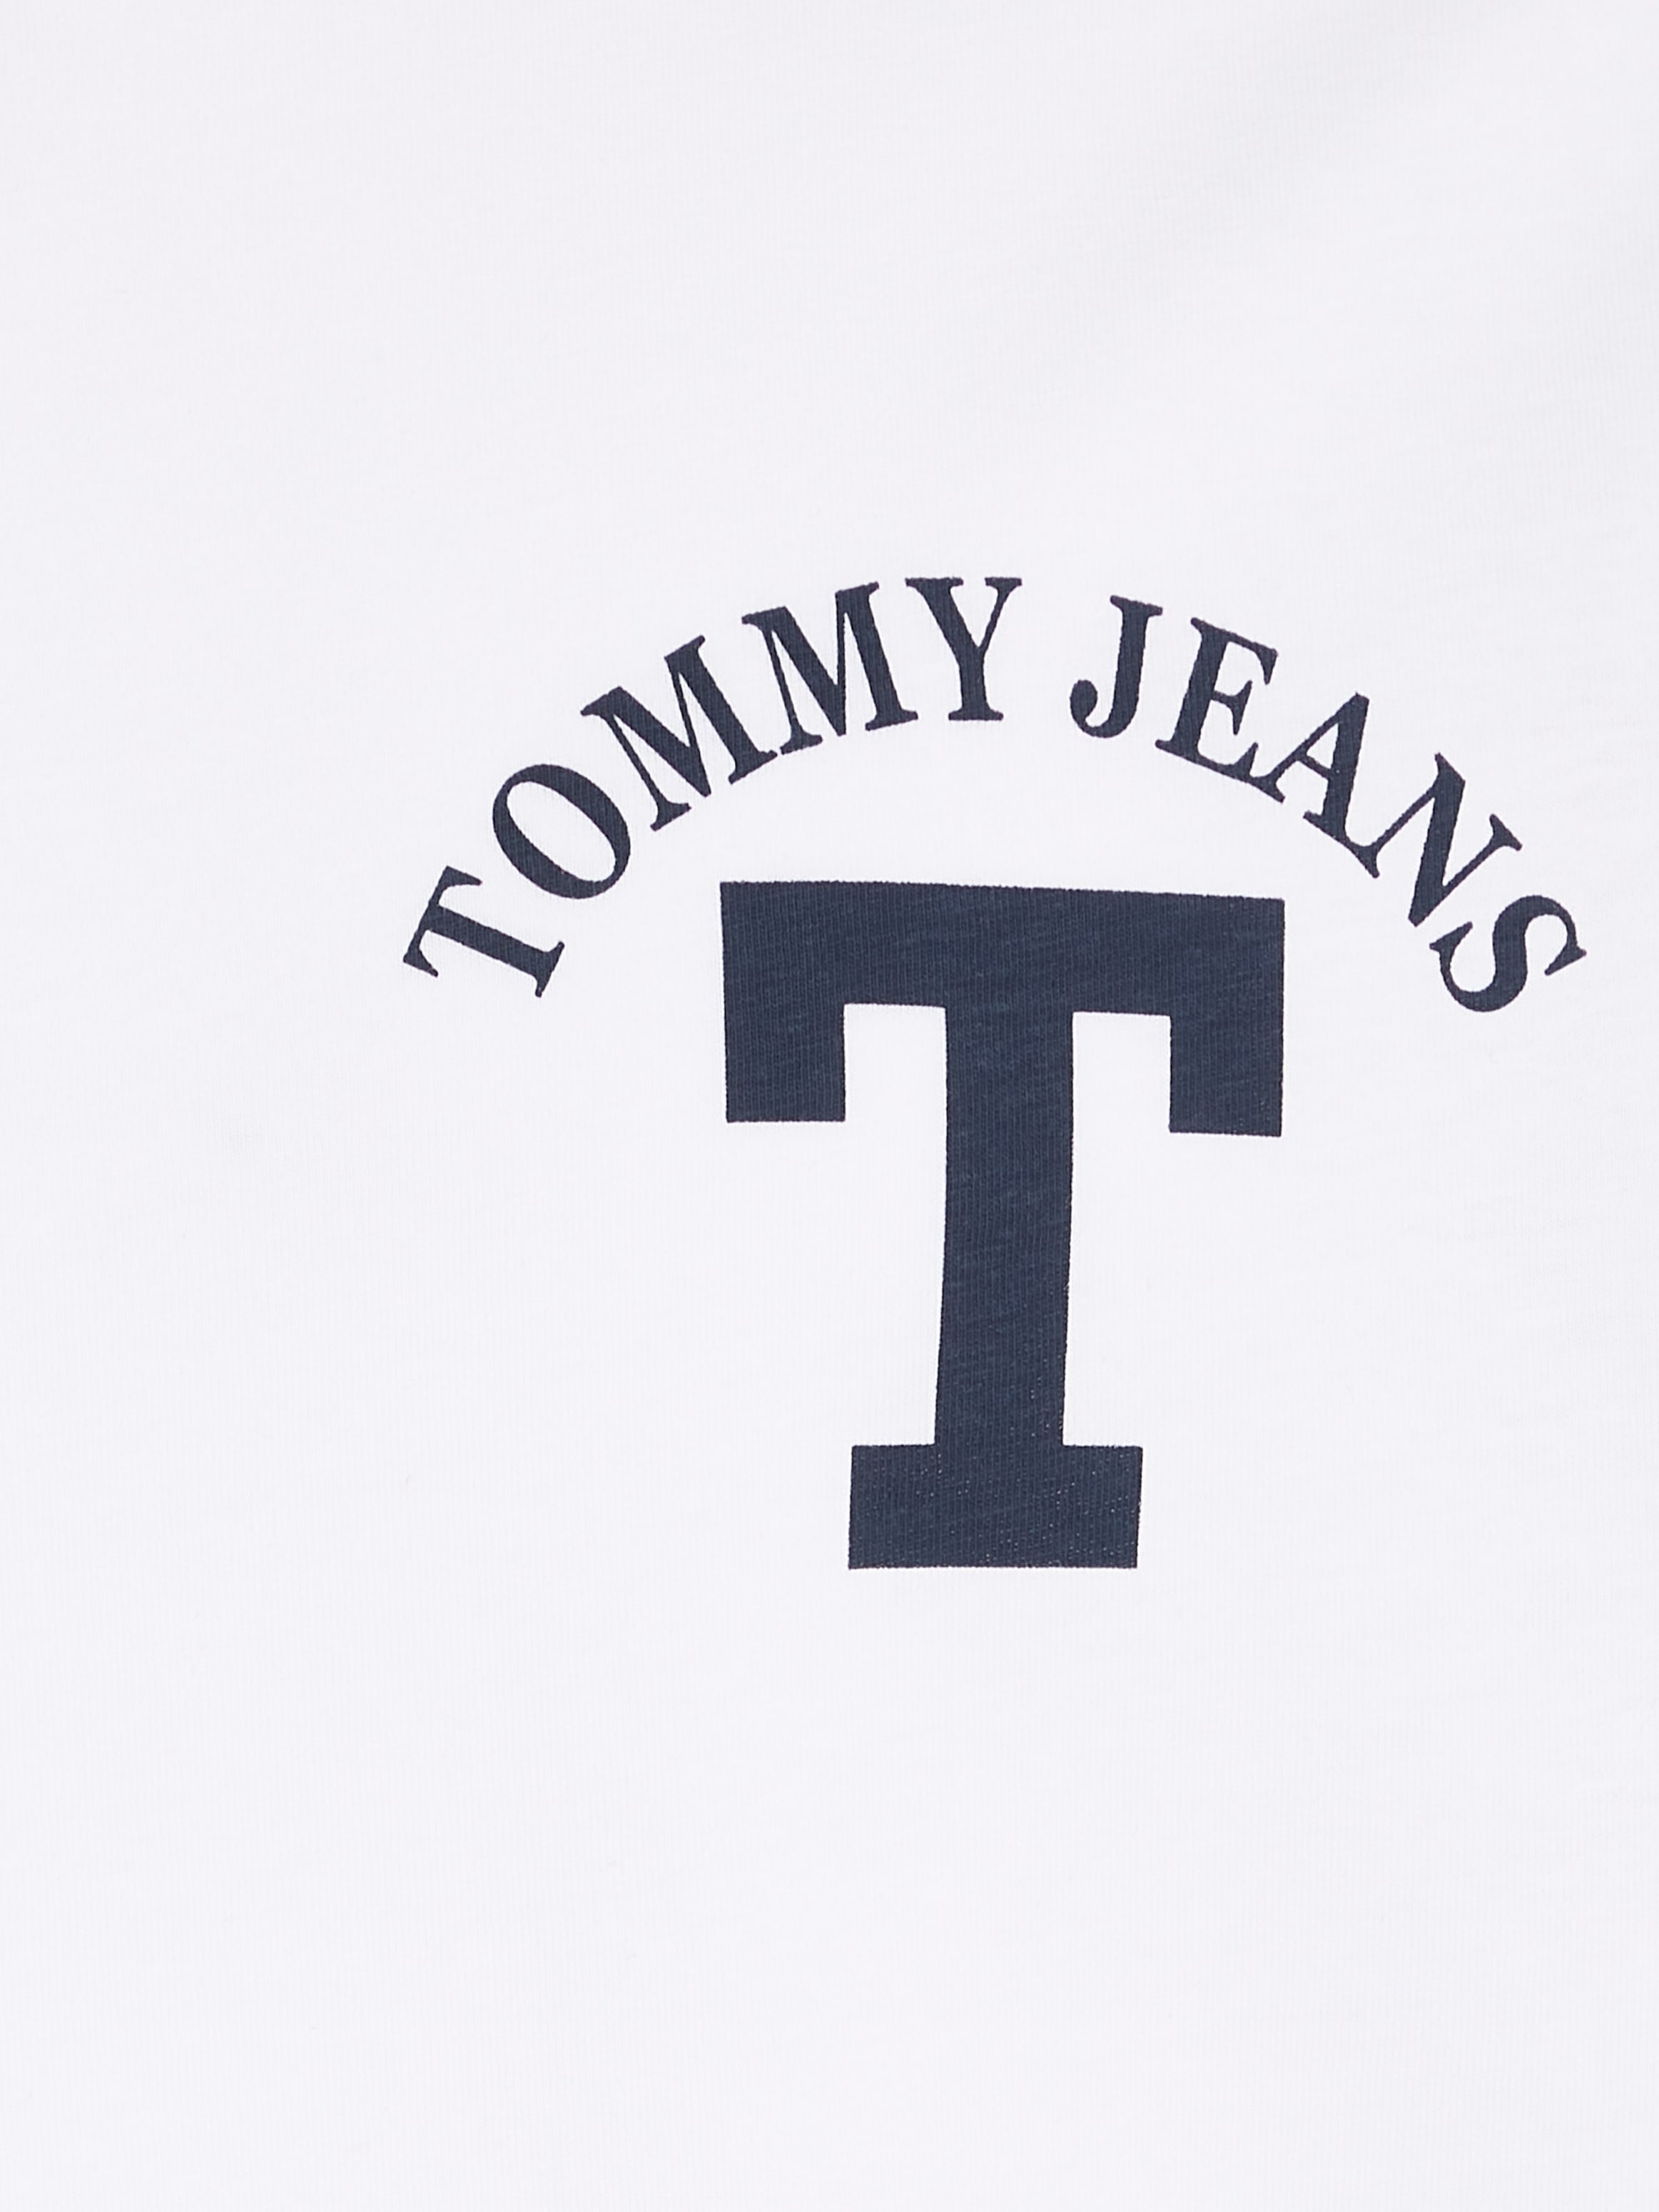 Tommy Jeans T-Shirt »TJM REG CURVED LETTERMAN TEE«